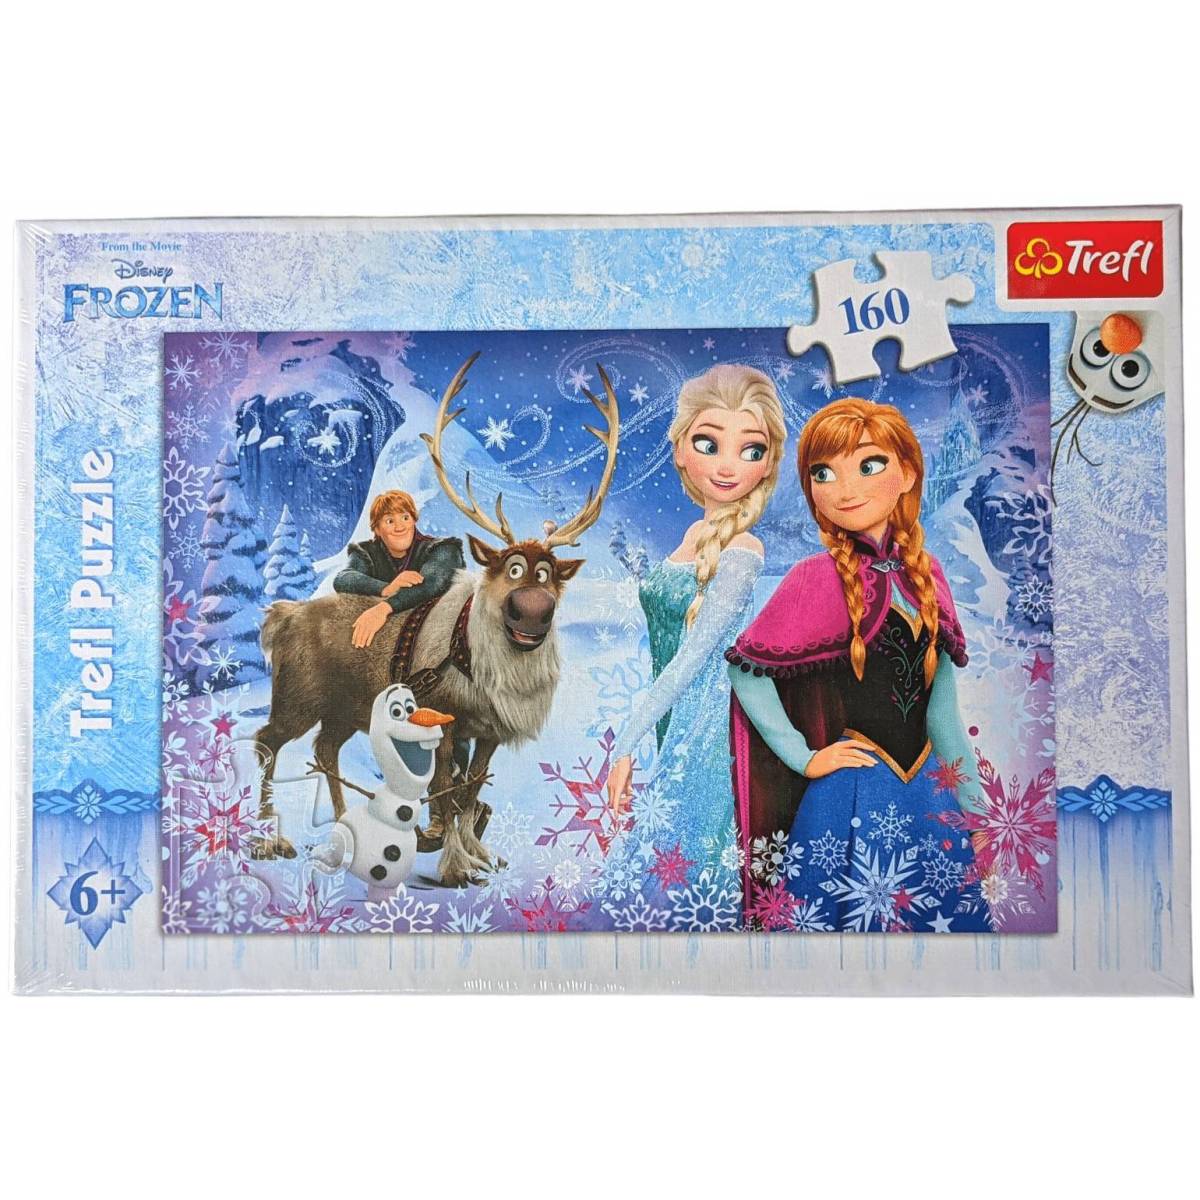 Trefl Kinderpuzzle 160 Stück Frozen